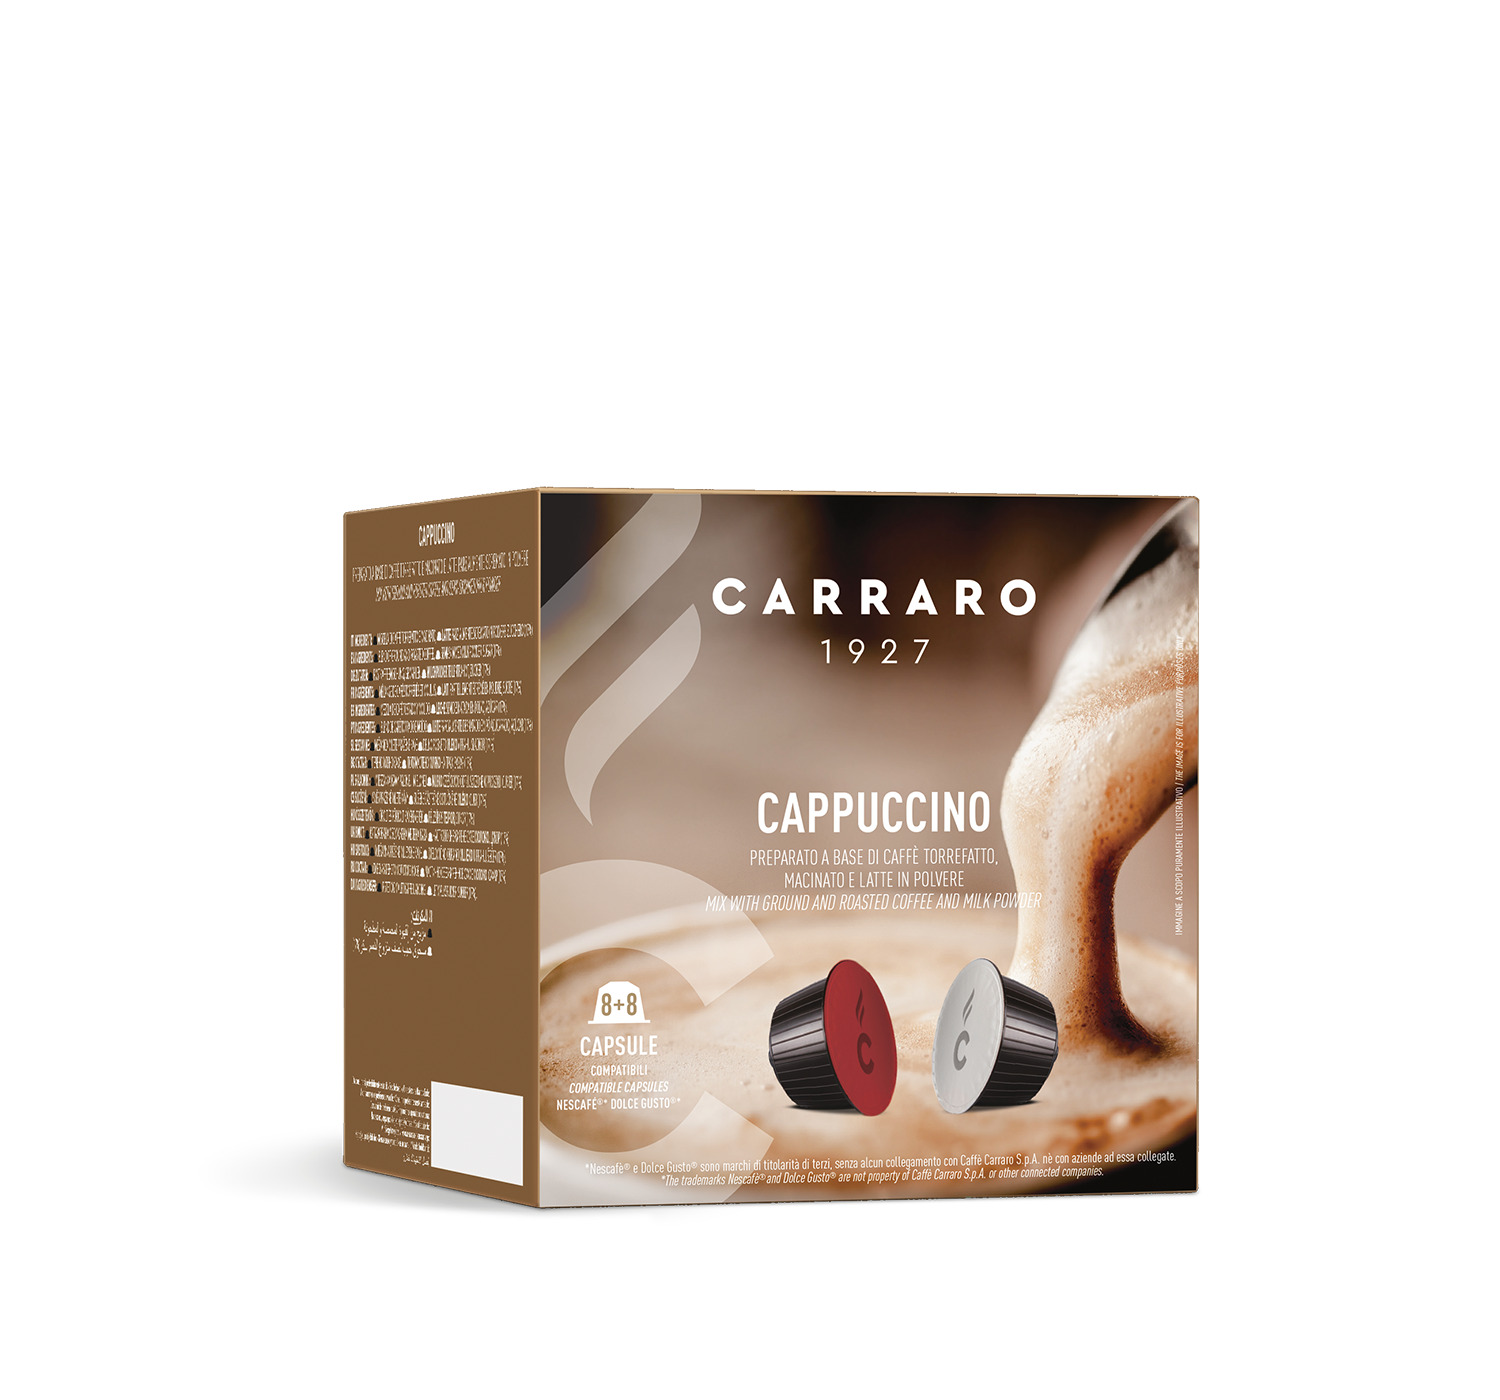 Capsules - Cappuccino – 16 capsules - Shop online Caffè Carraro